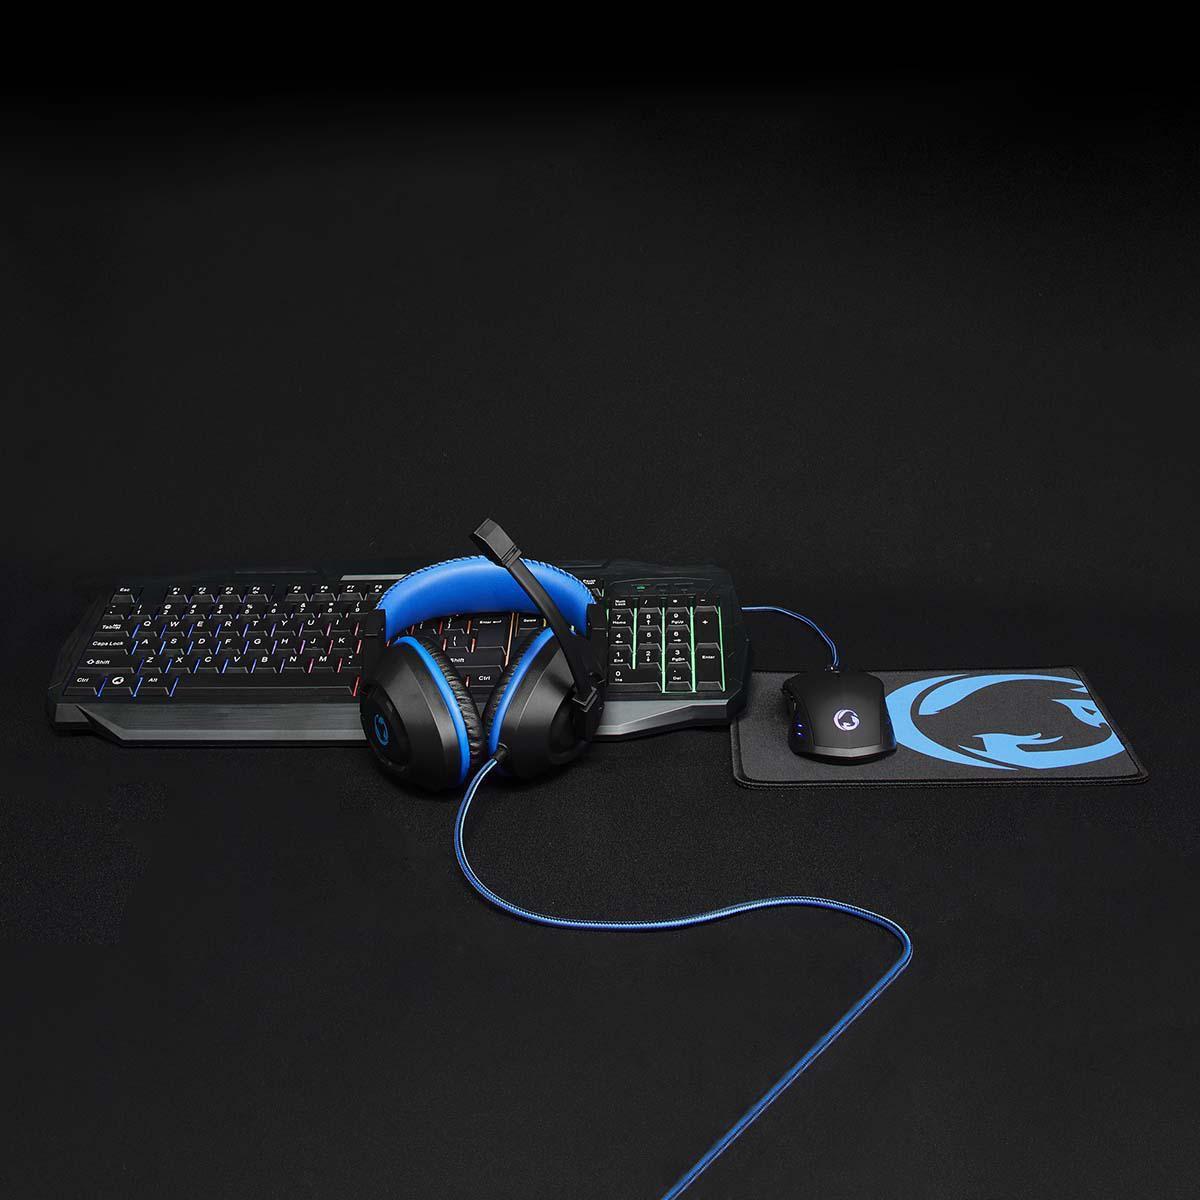 Nedis  Gaming Combo Kit | 4-in-1 | Tastatur, Headset, Maus und Mauspad | Blau / Schwarz | QWERTY | IT Layout 